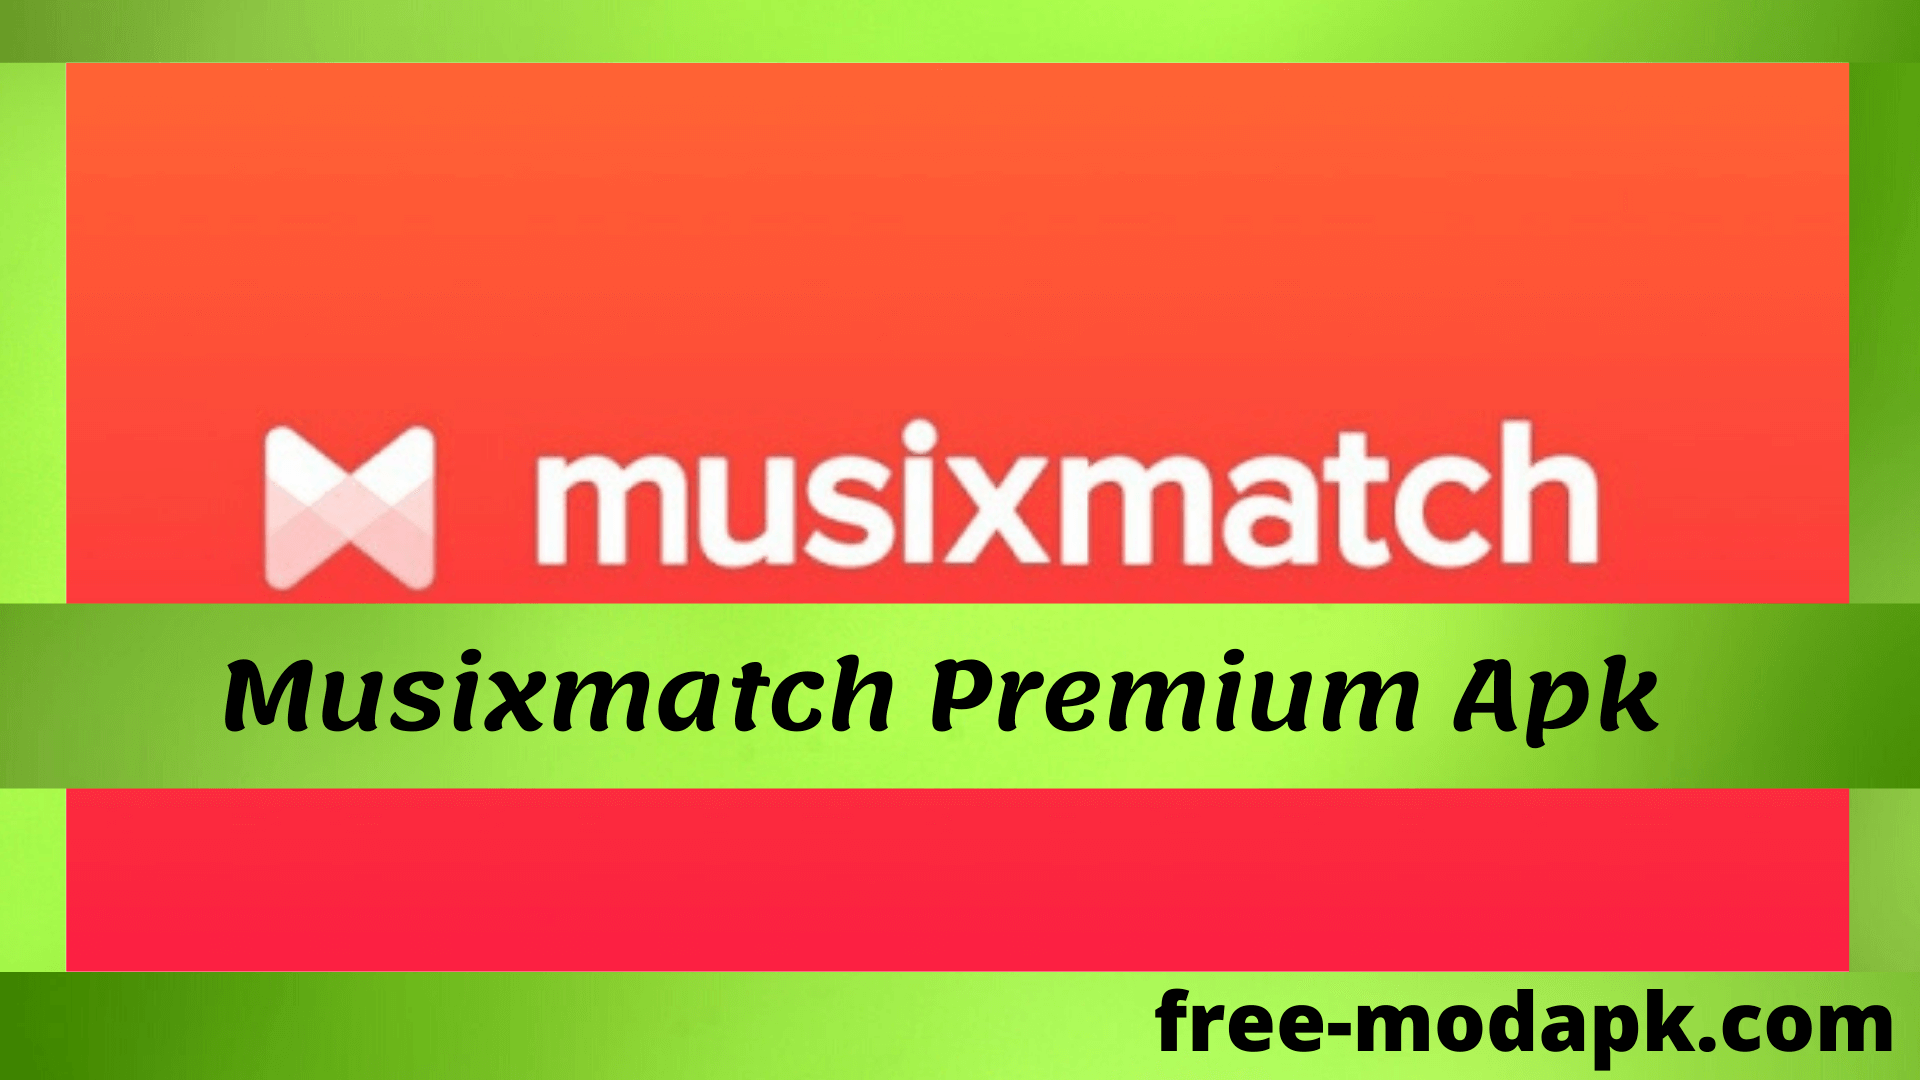 Musixmatch Premium Apk Latest Version | Mod | 2020